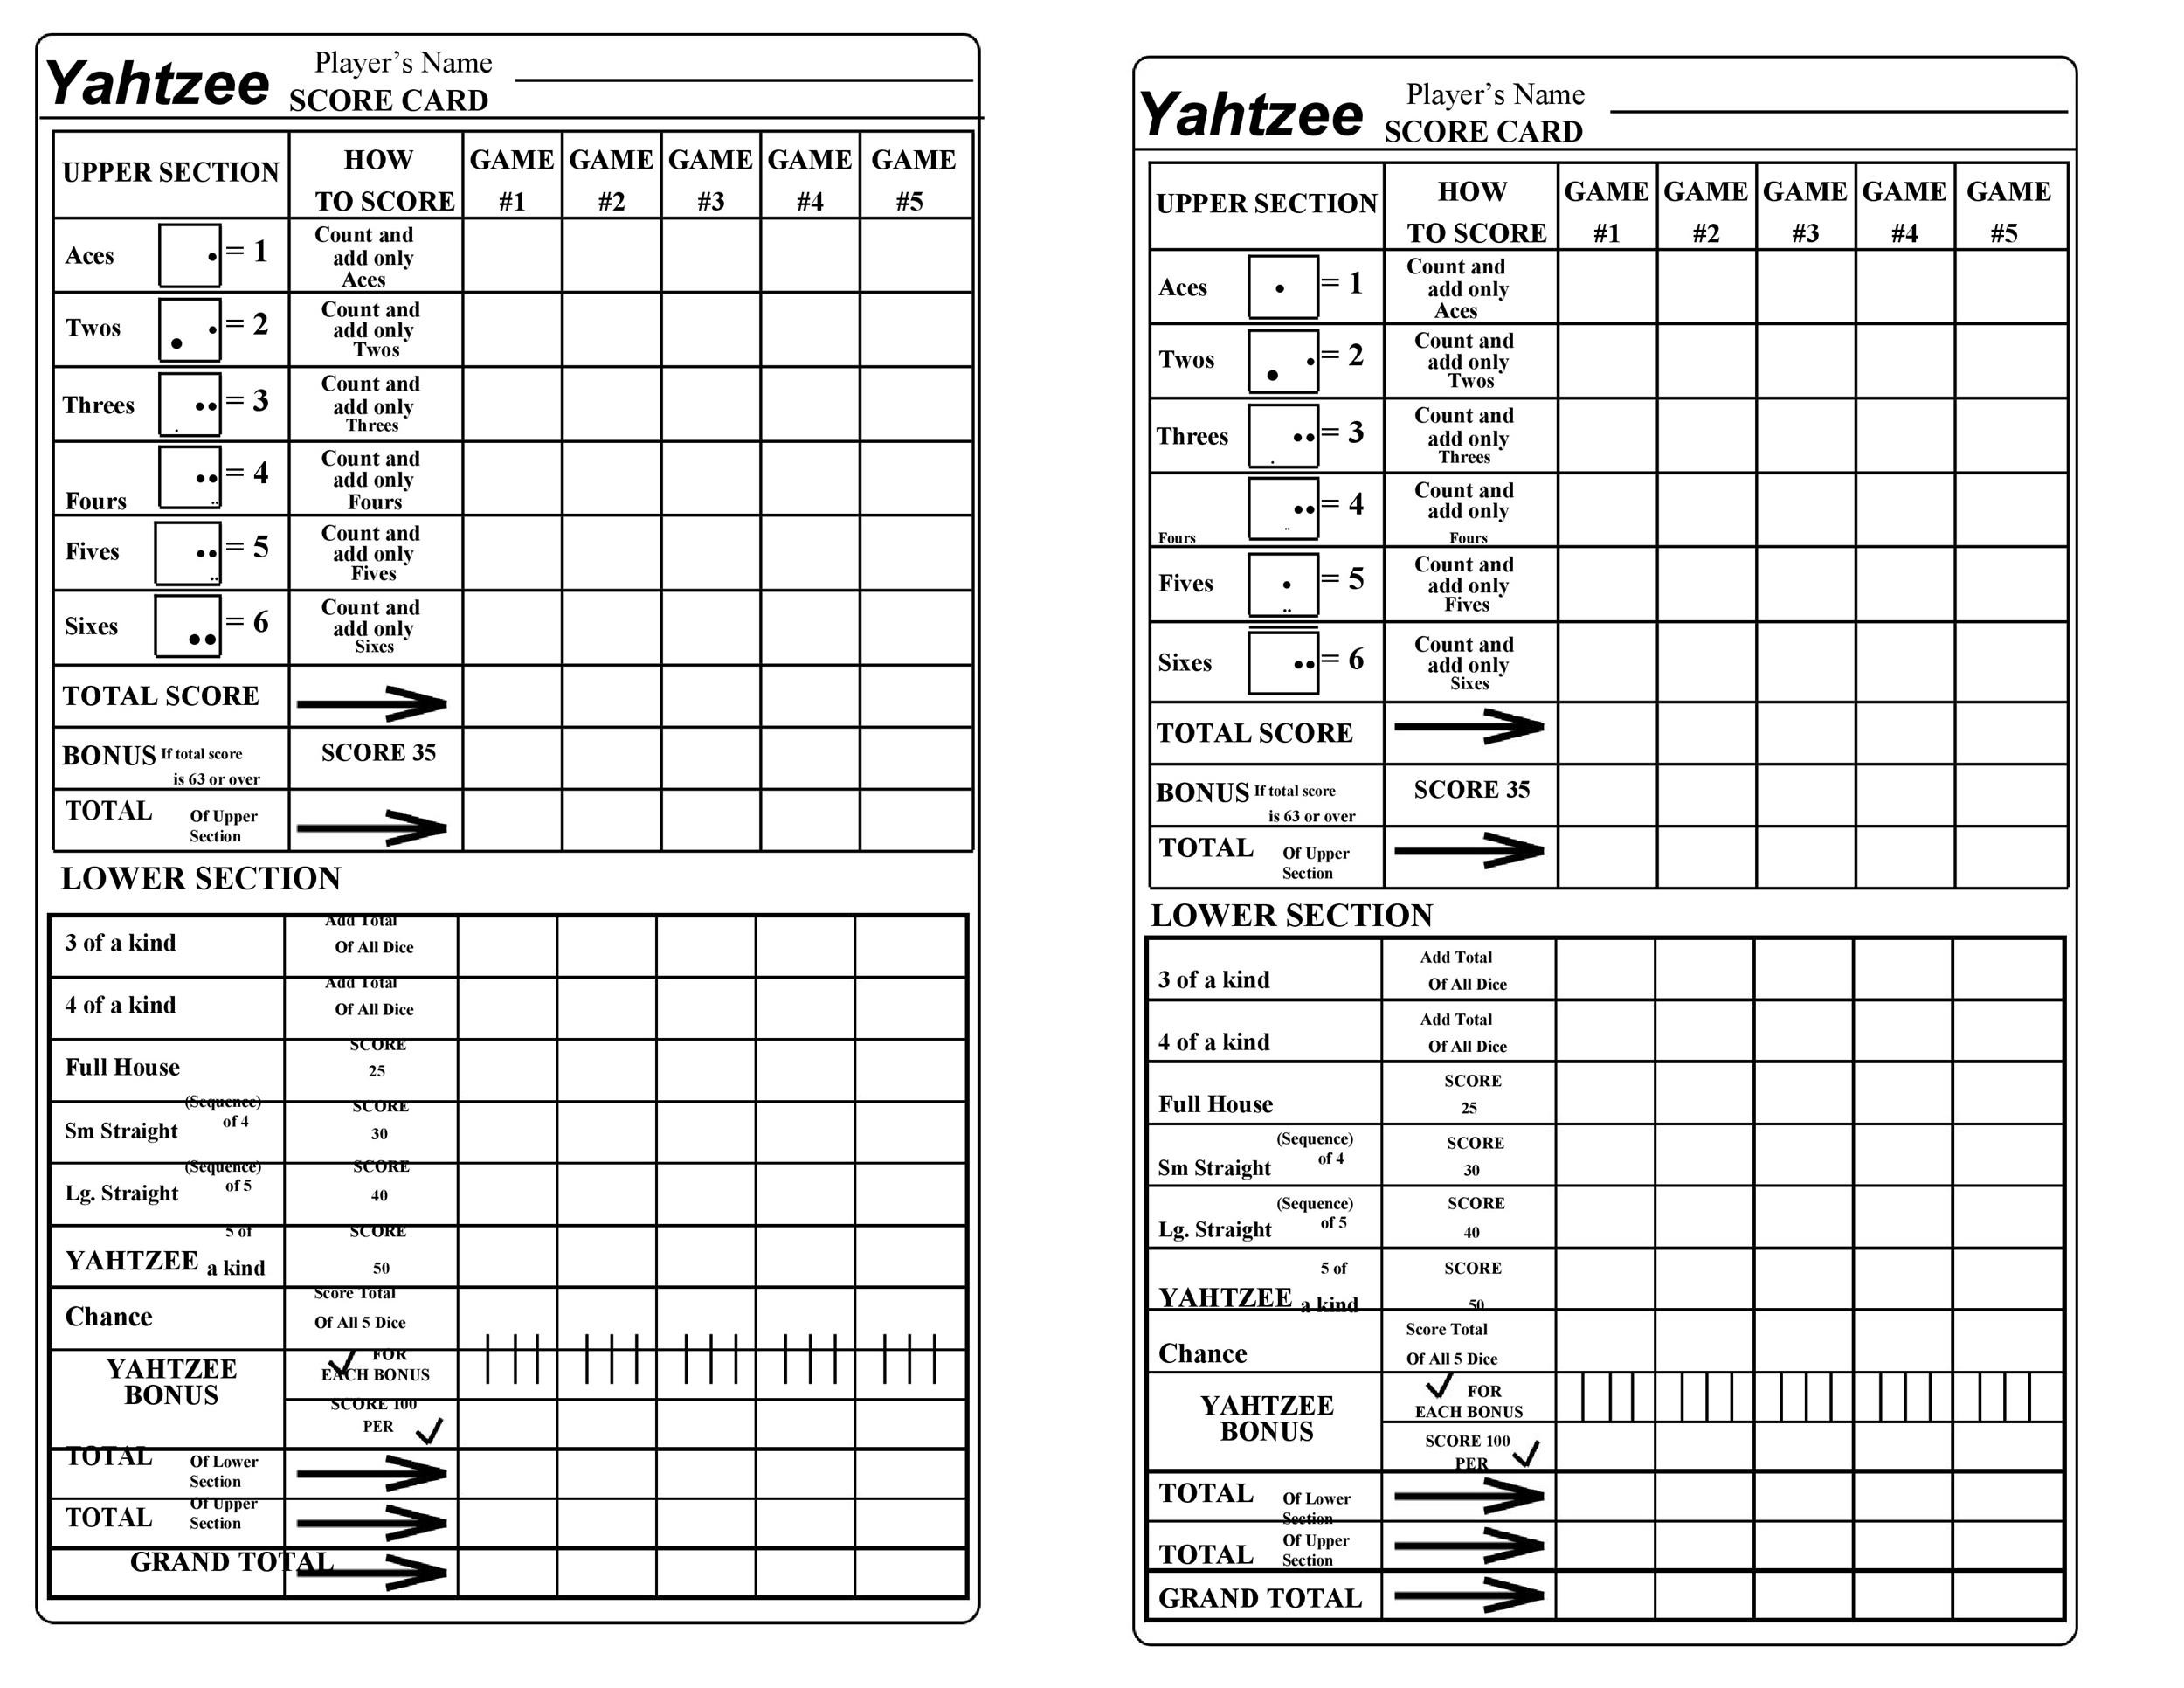 28 Printable Yahtzee Score Sheets & Cards (101 FREE) ᐅ TemplateLab